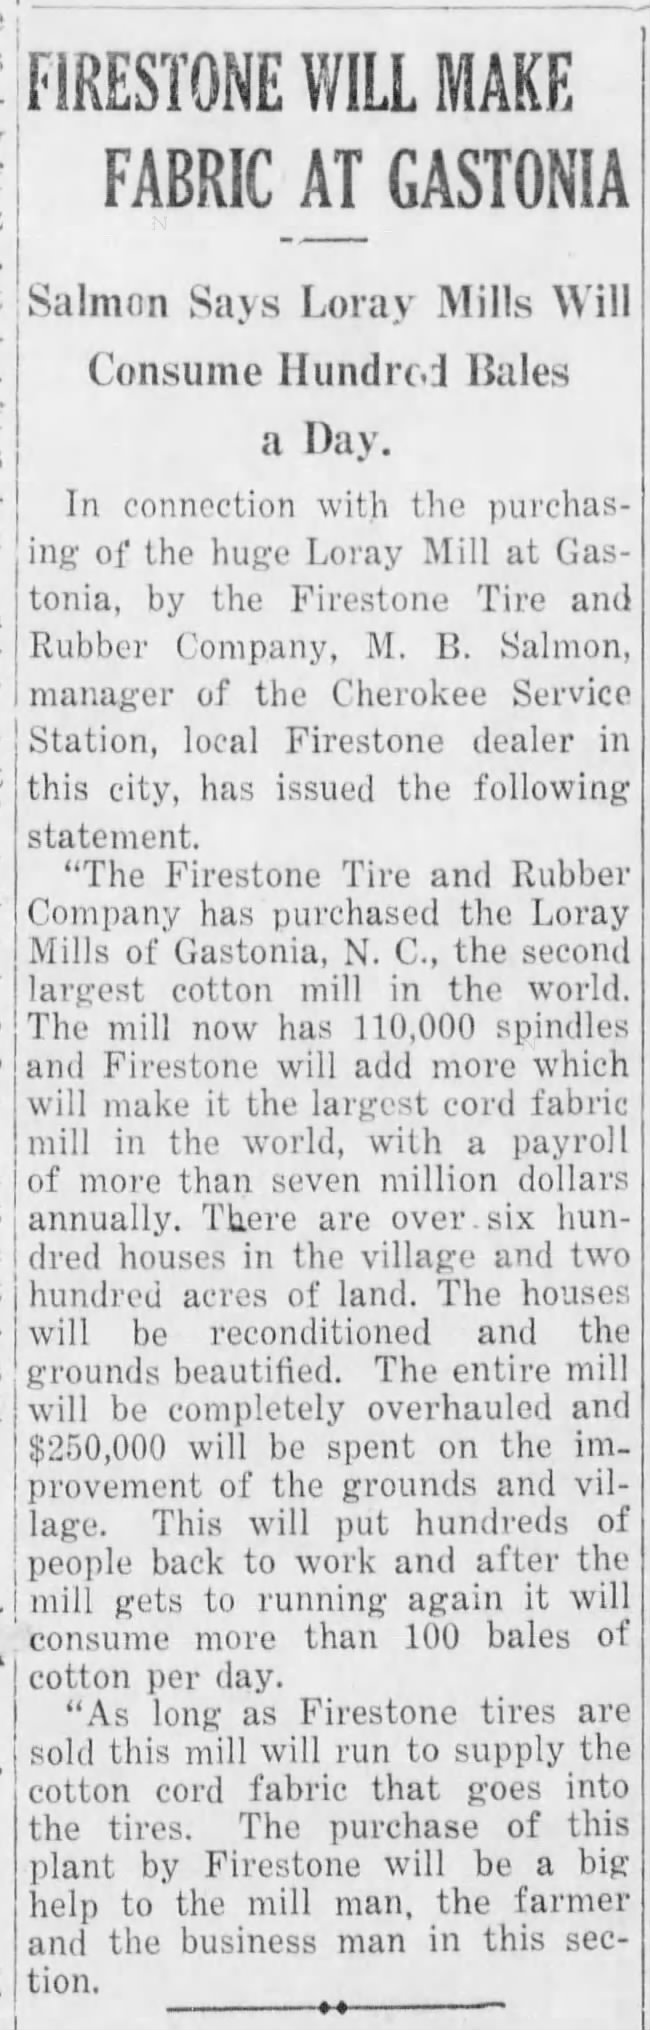 Firestone Will Make Fabric at Gastonia- May 1935